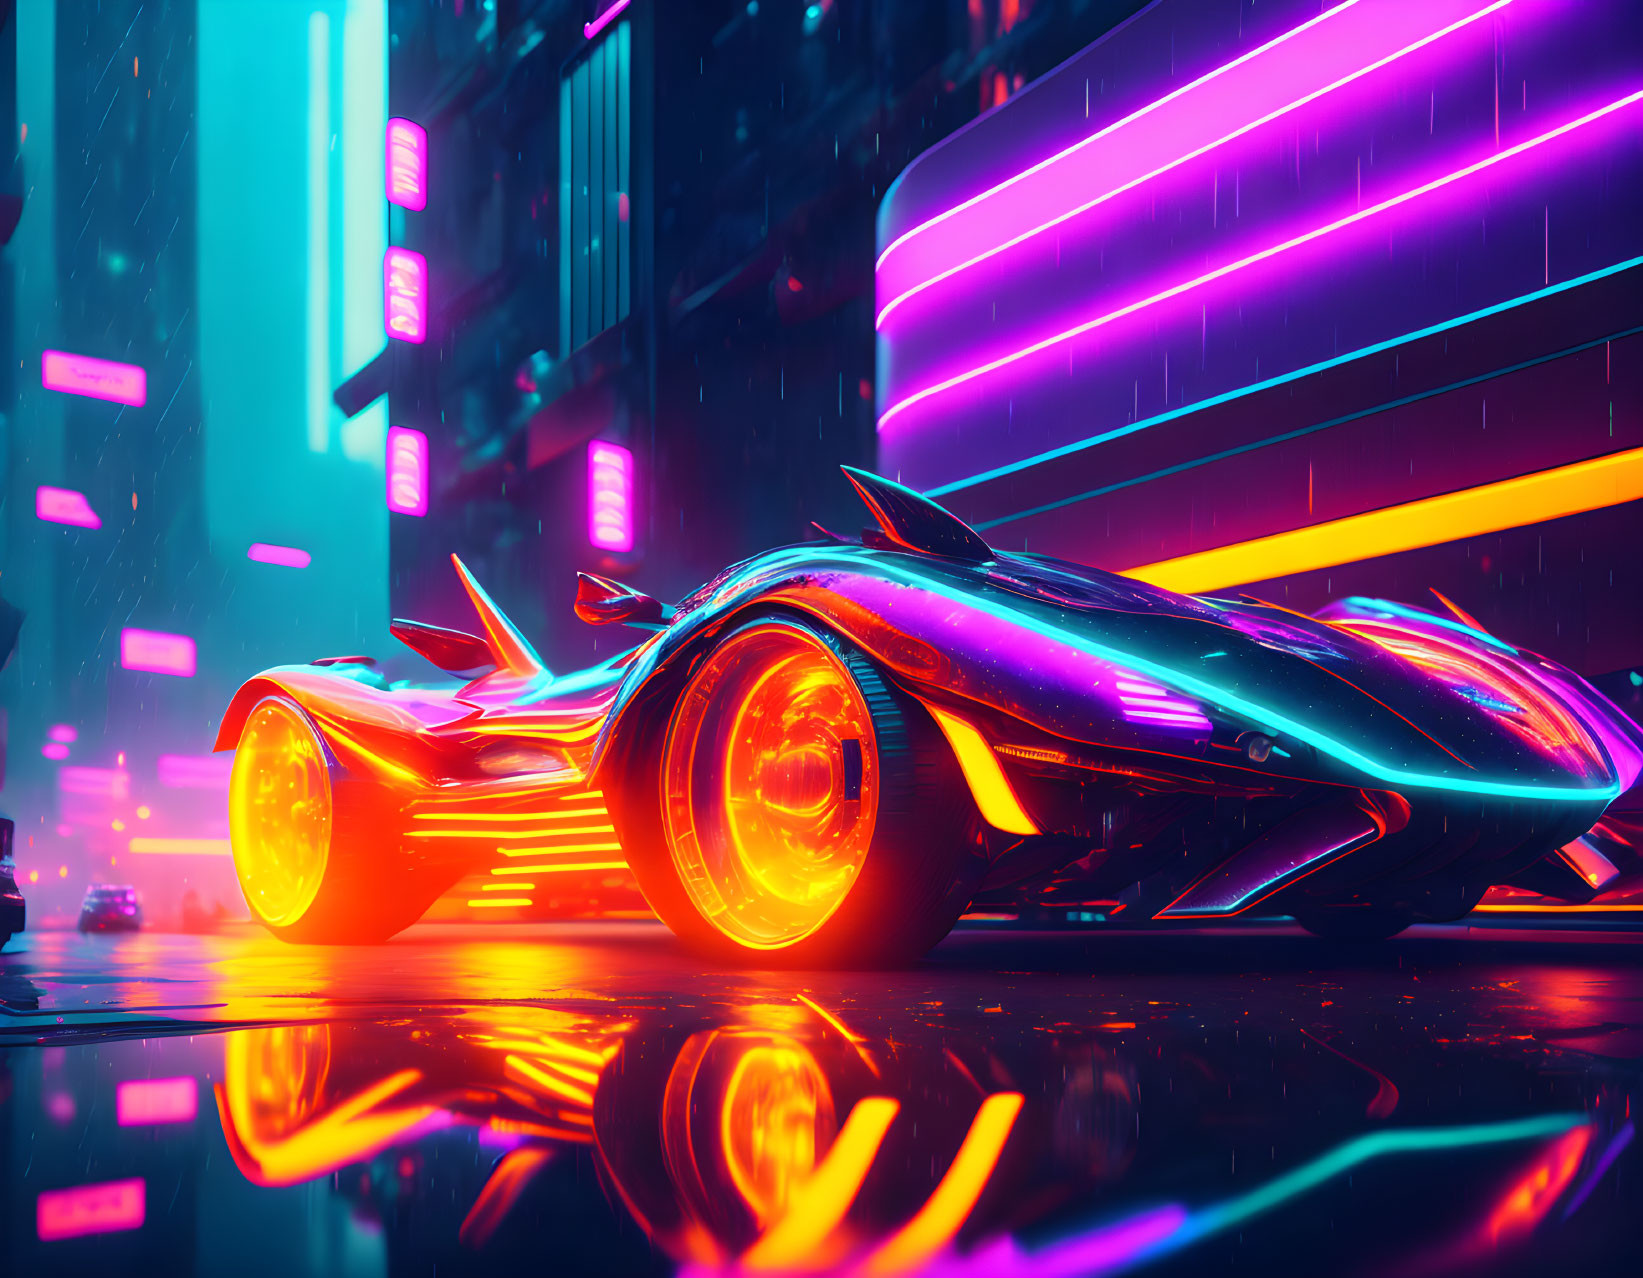 Neon drive